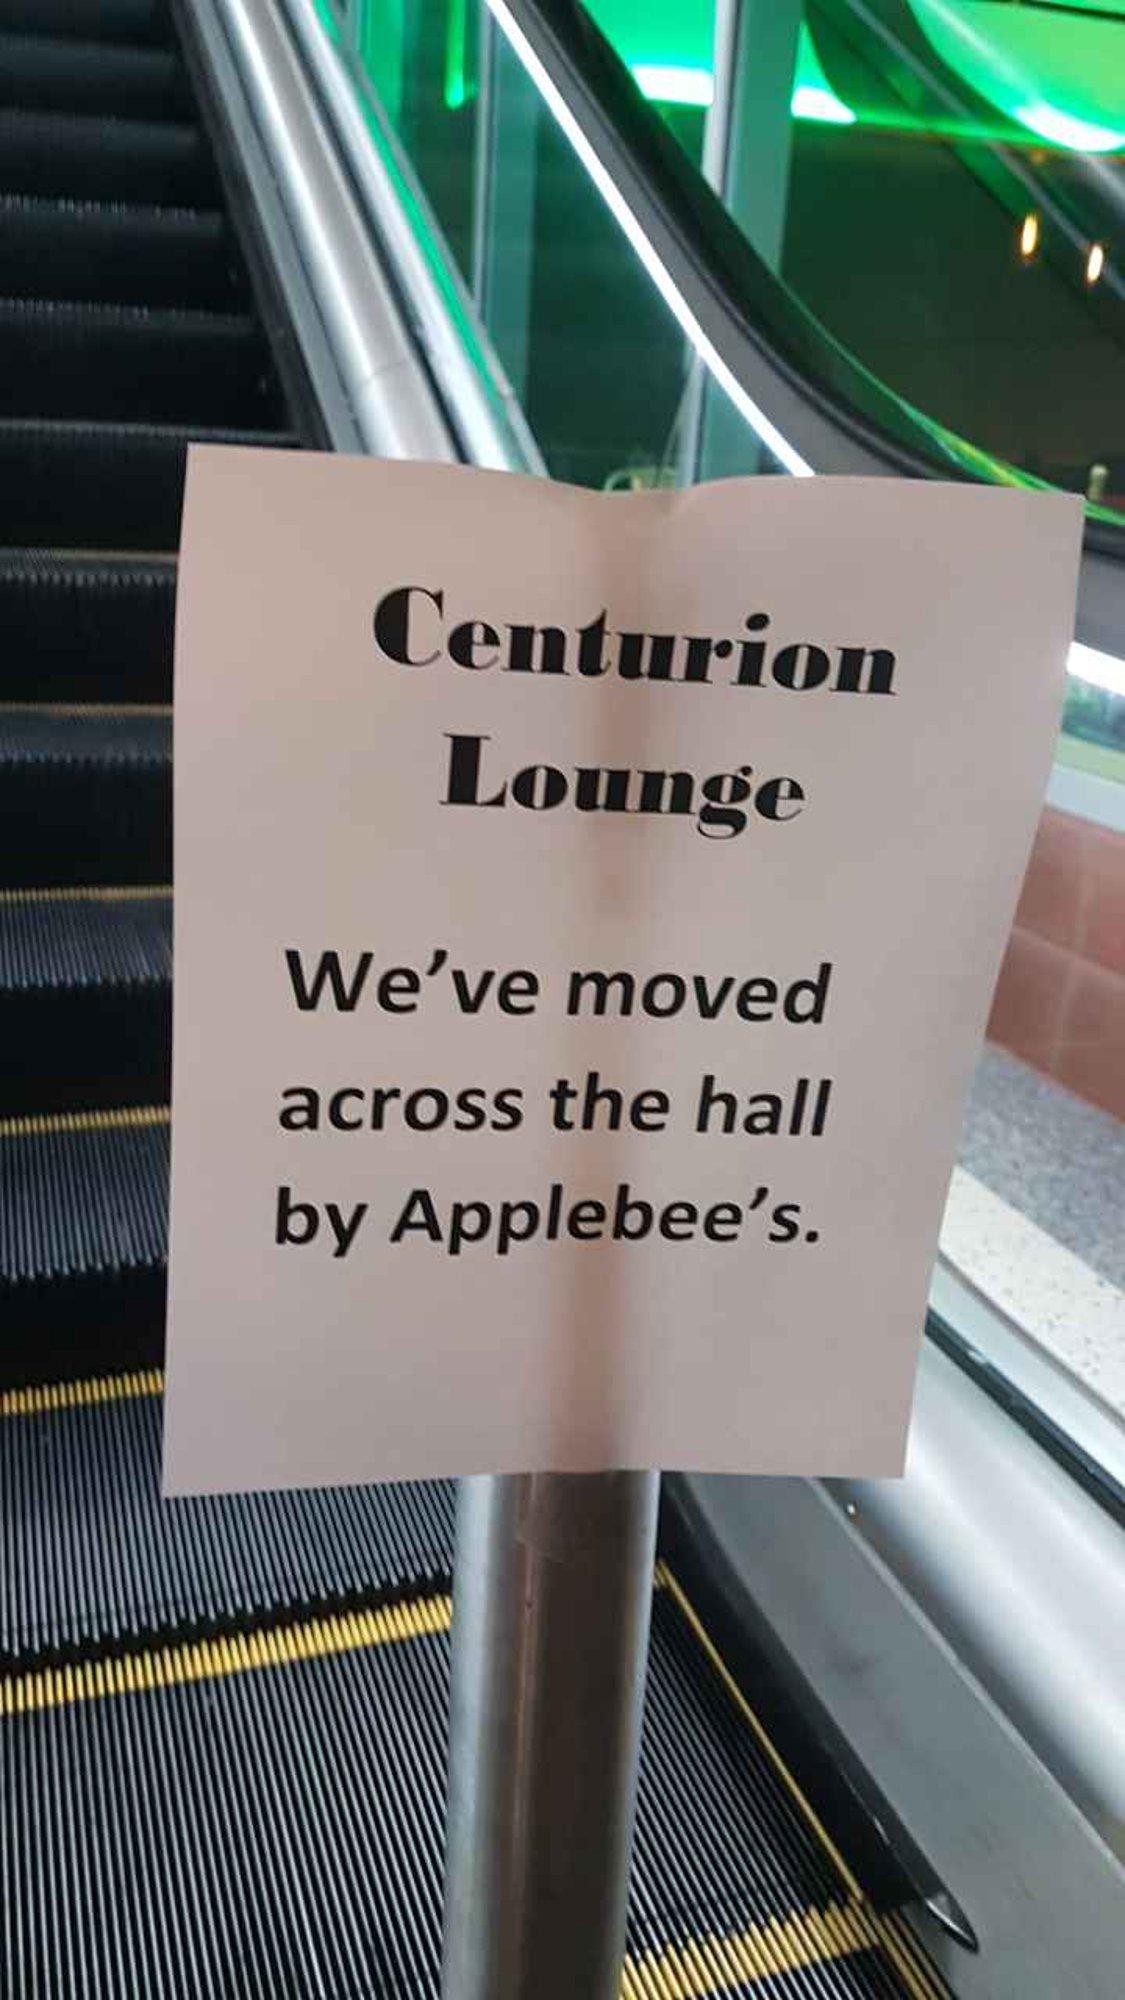 The Centurion Lounge image 9 of 41